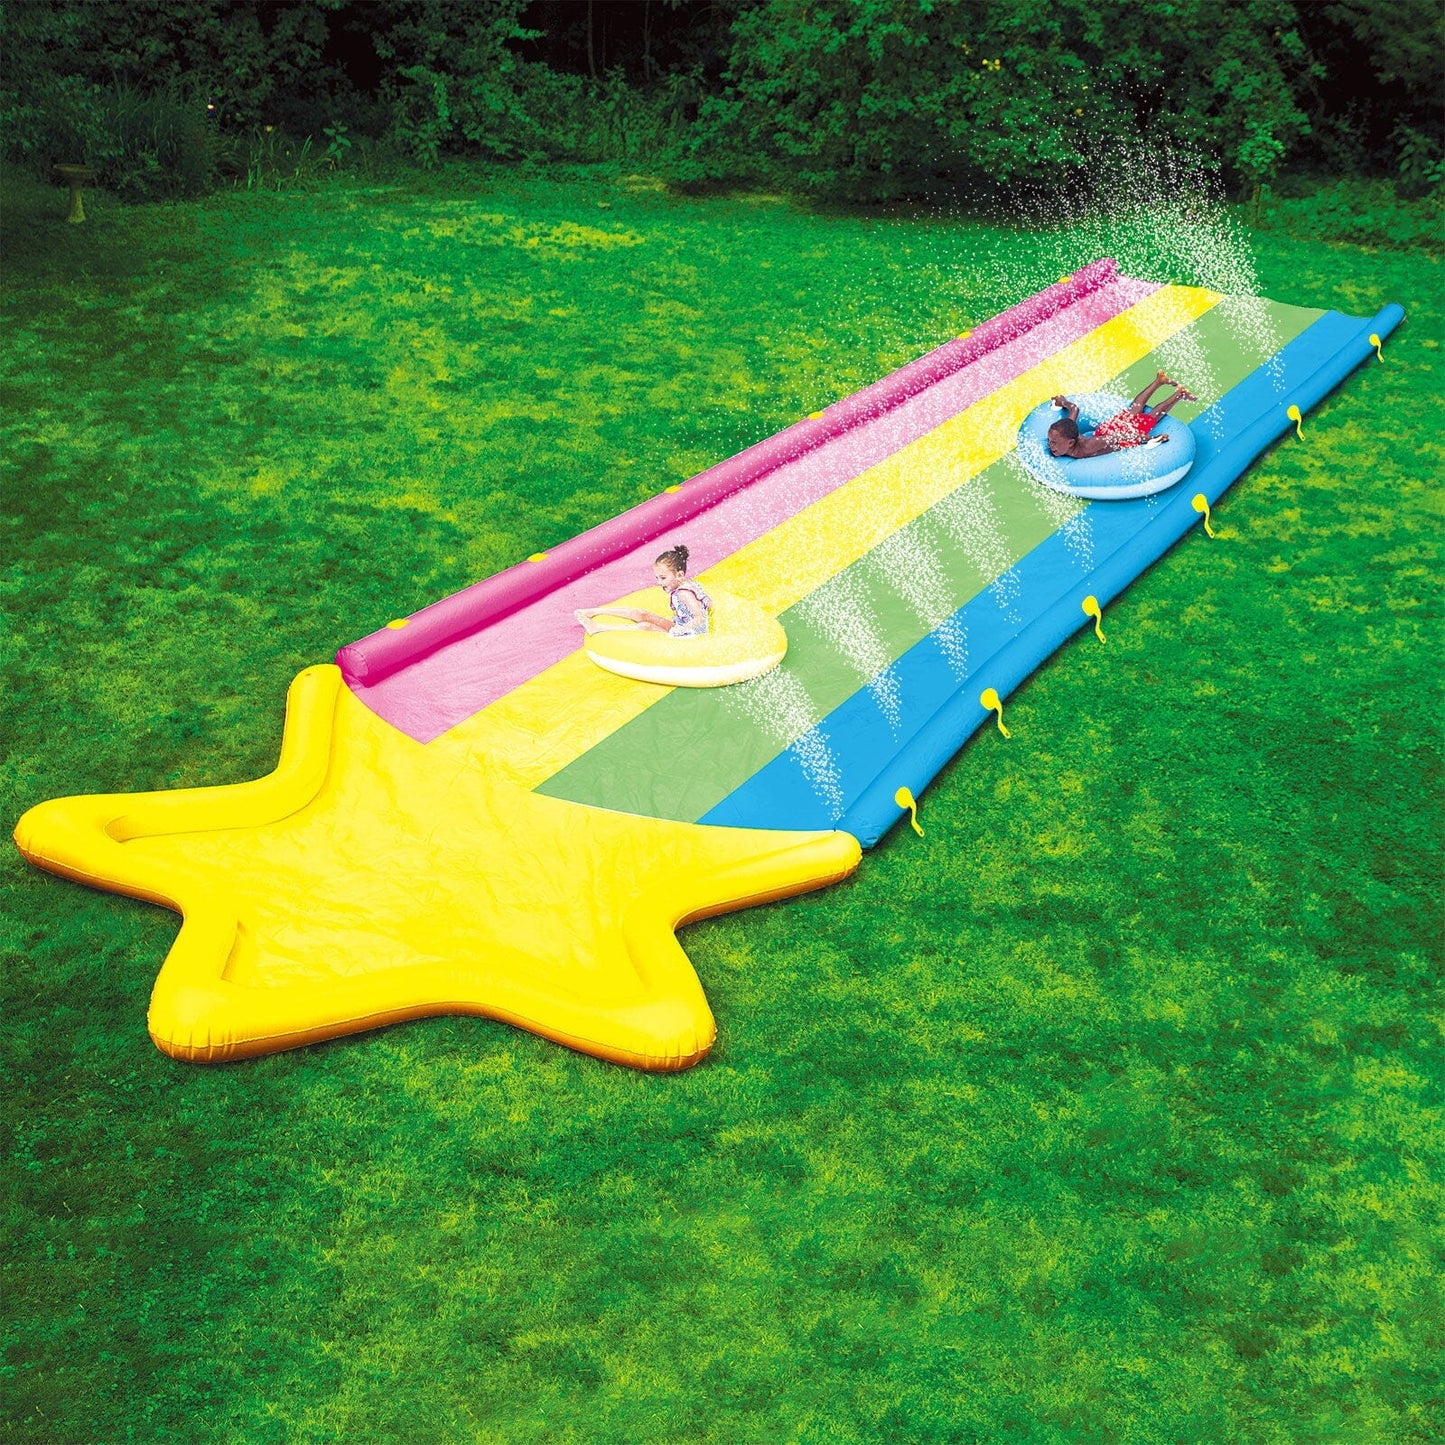 Rainbow Star Super Slide